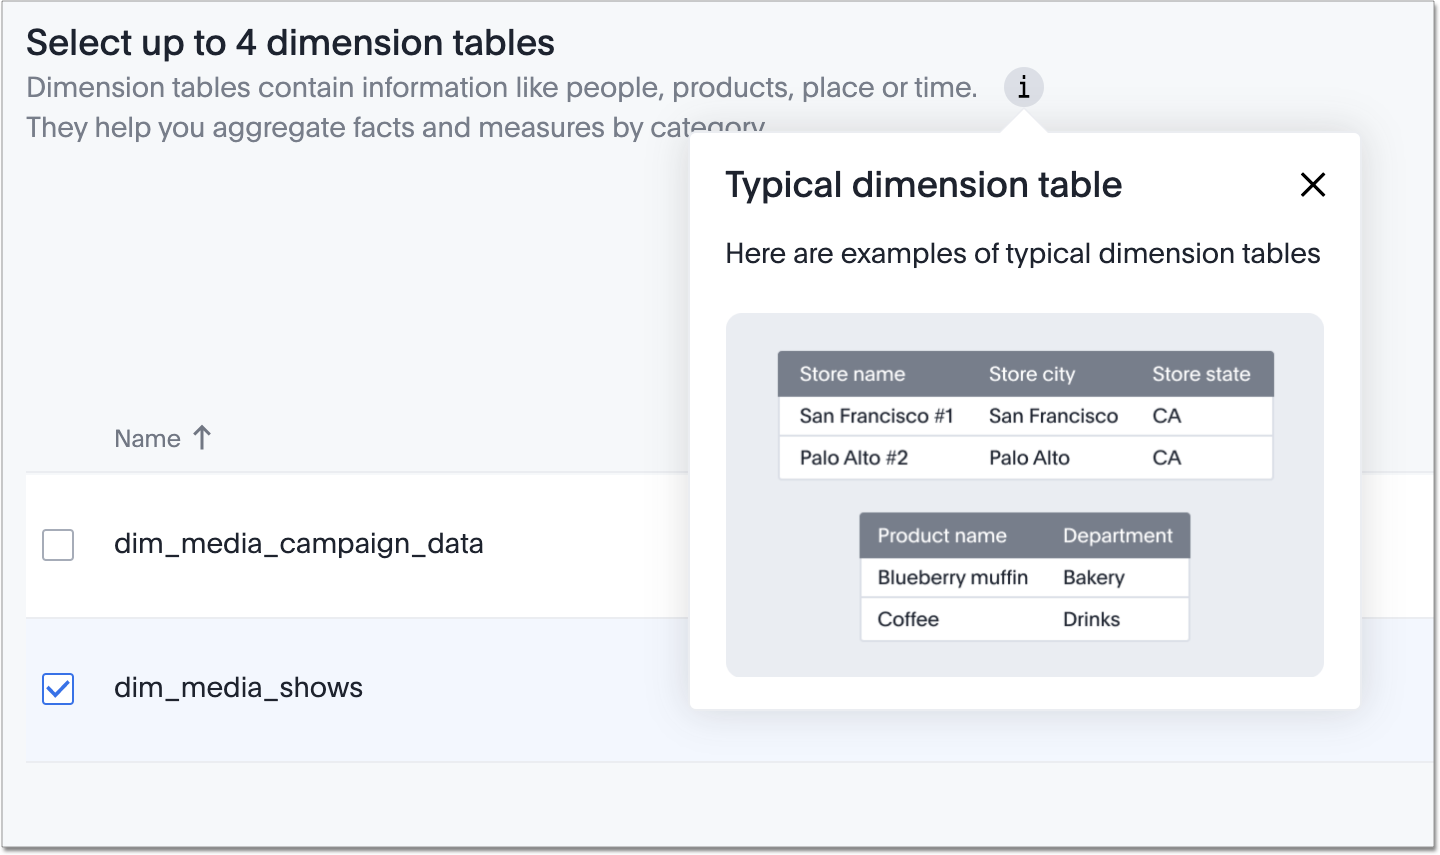 Dimension table informational blurb